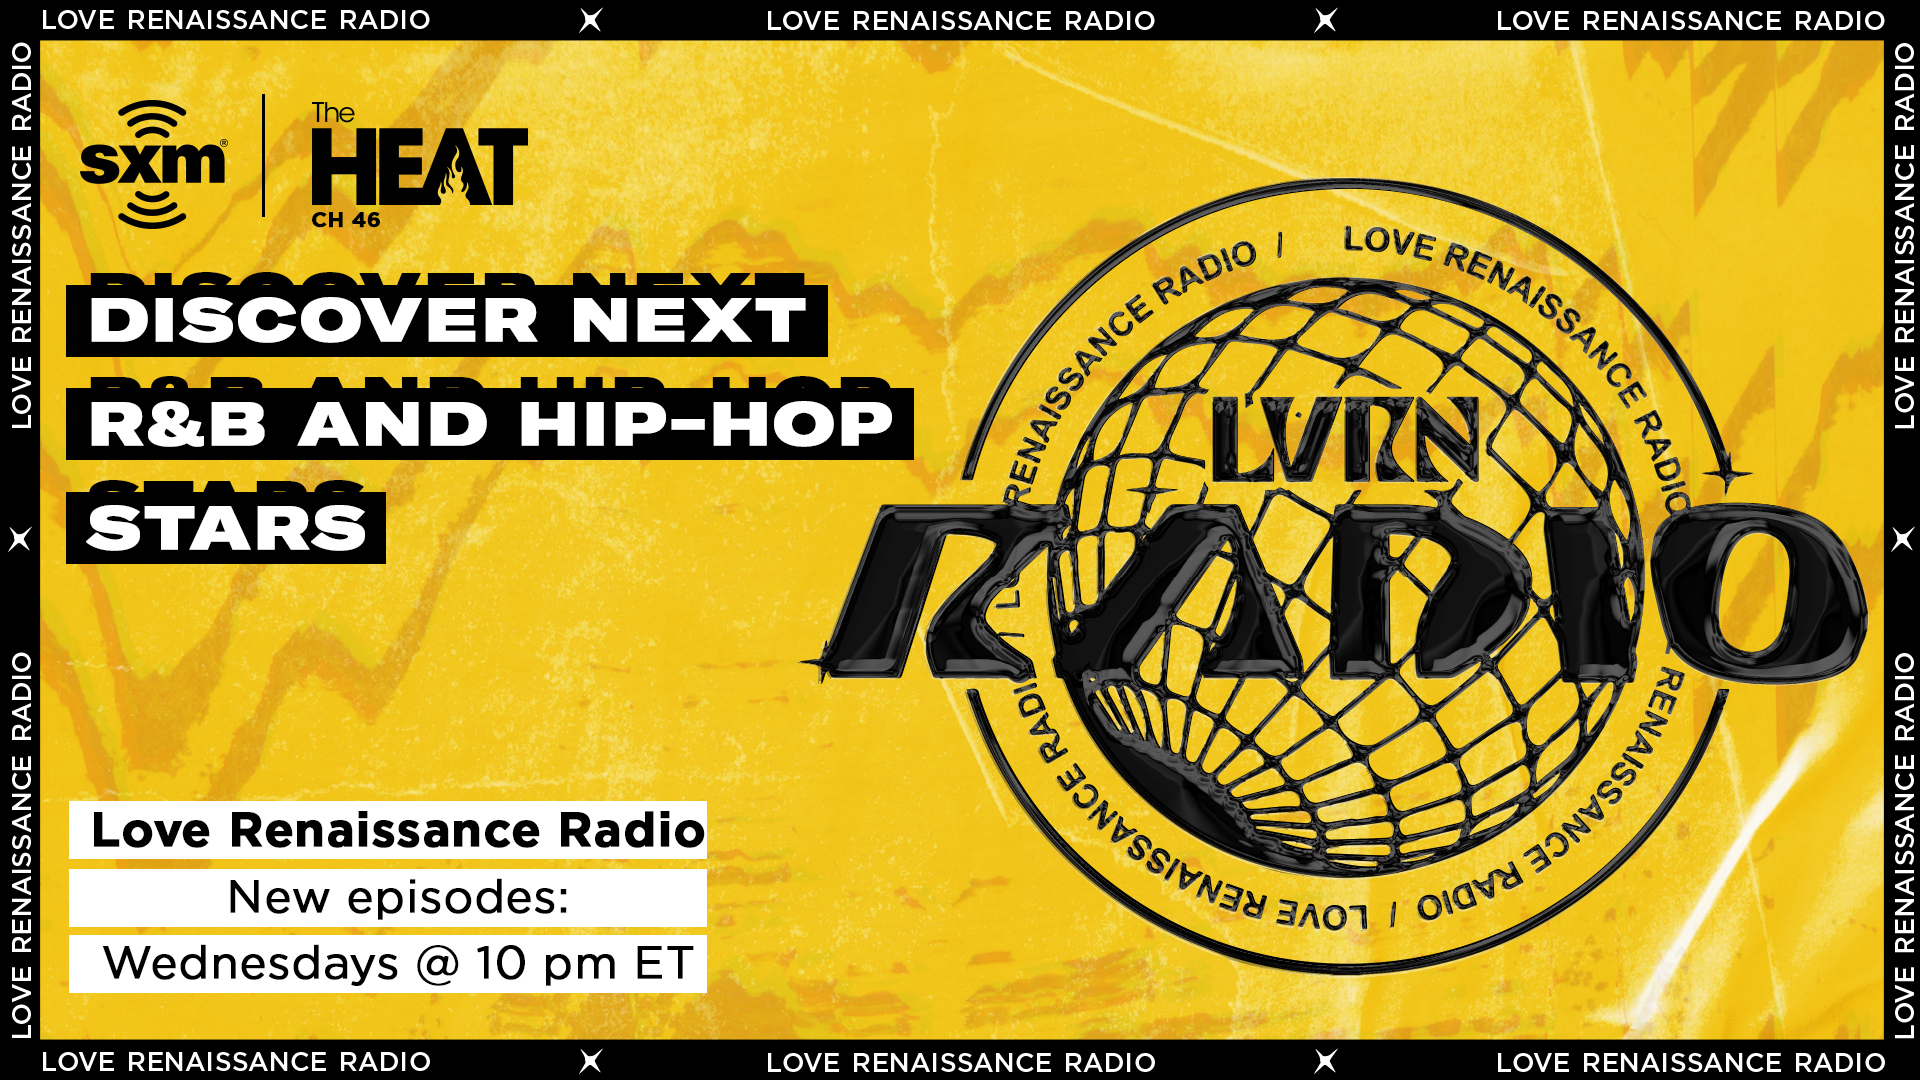 SiriusXM Love Renaissance Radio